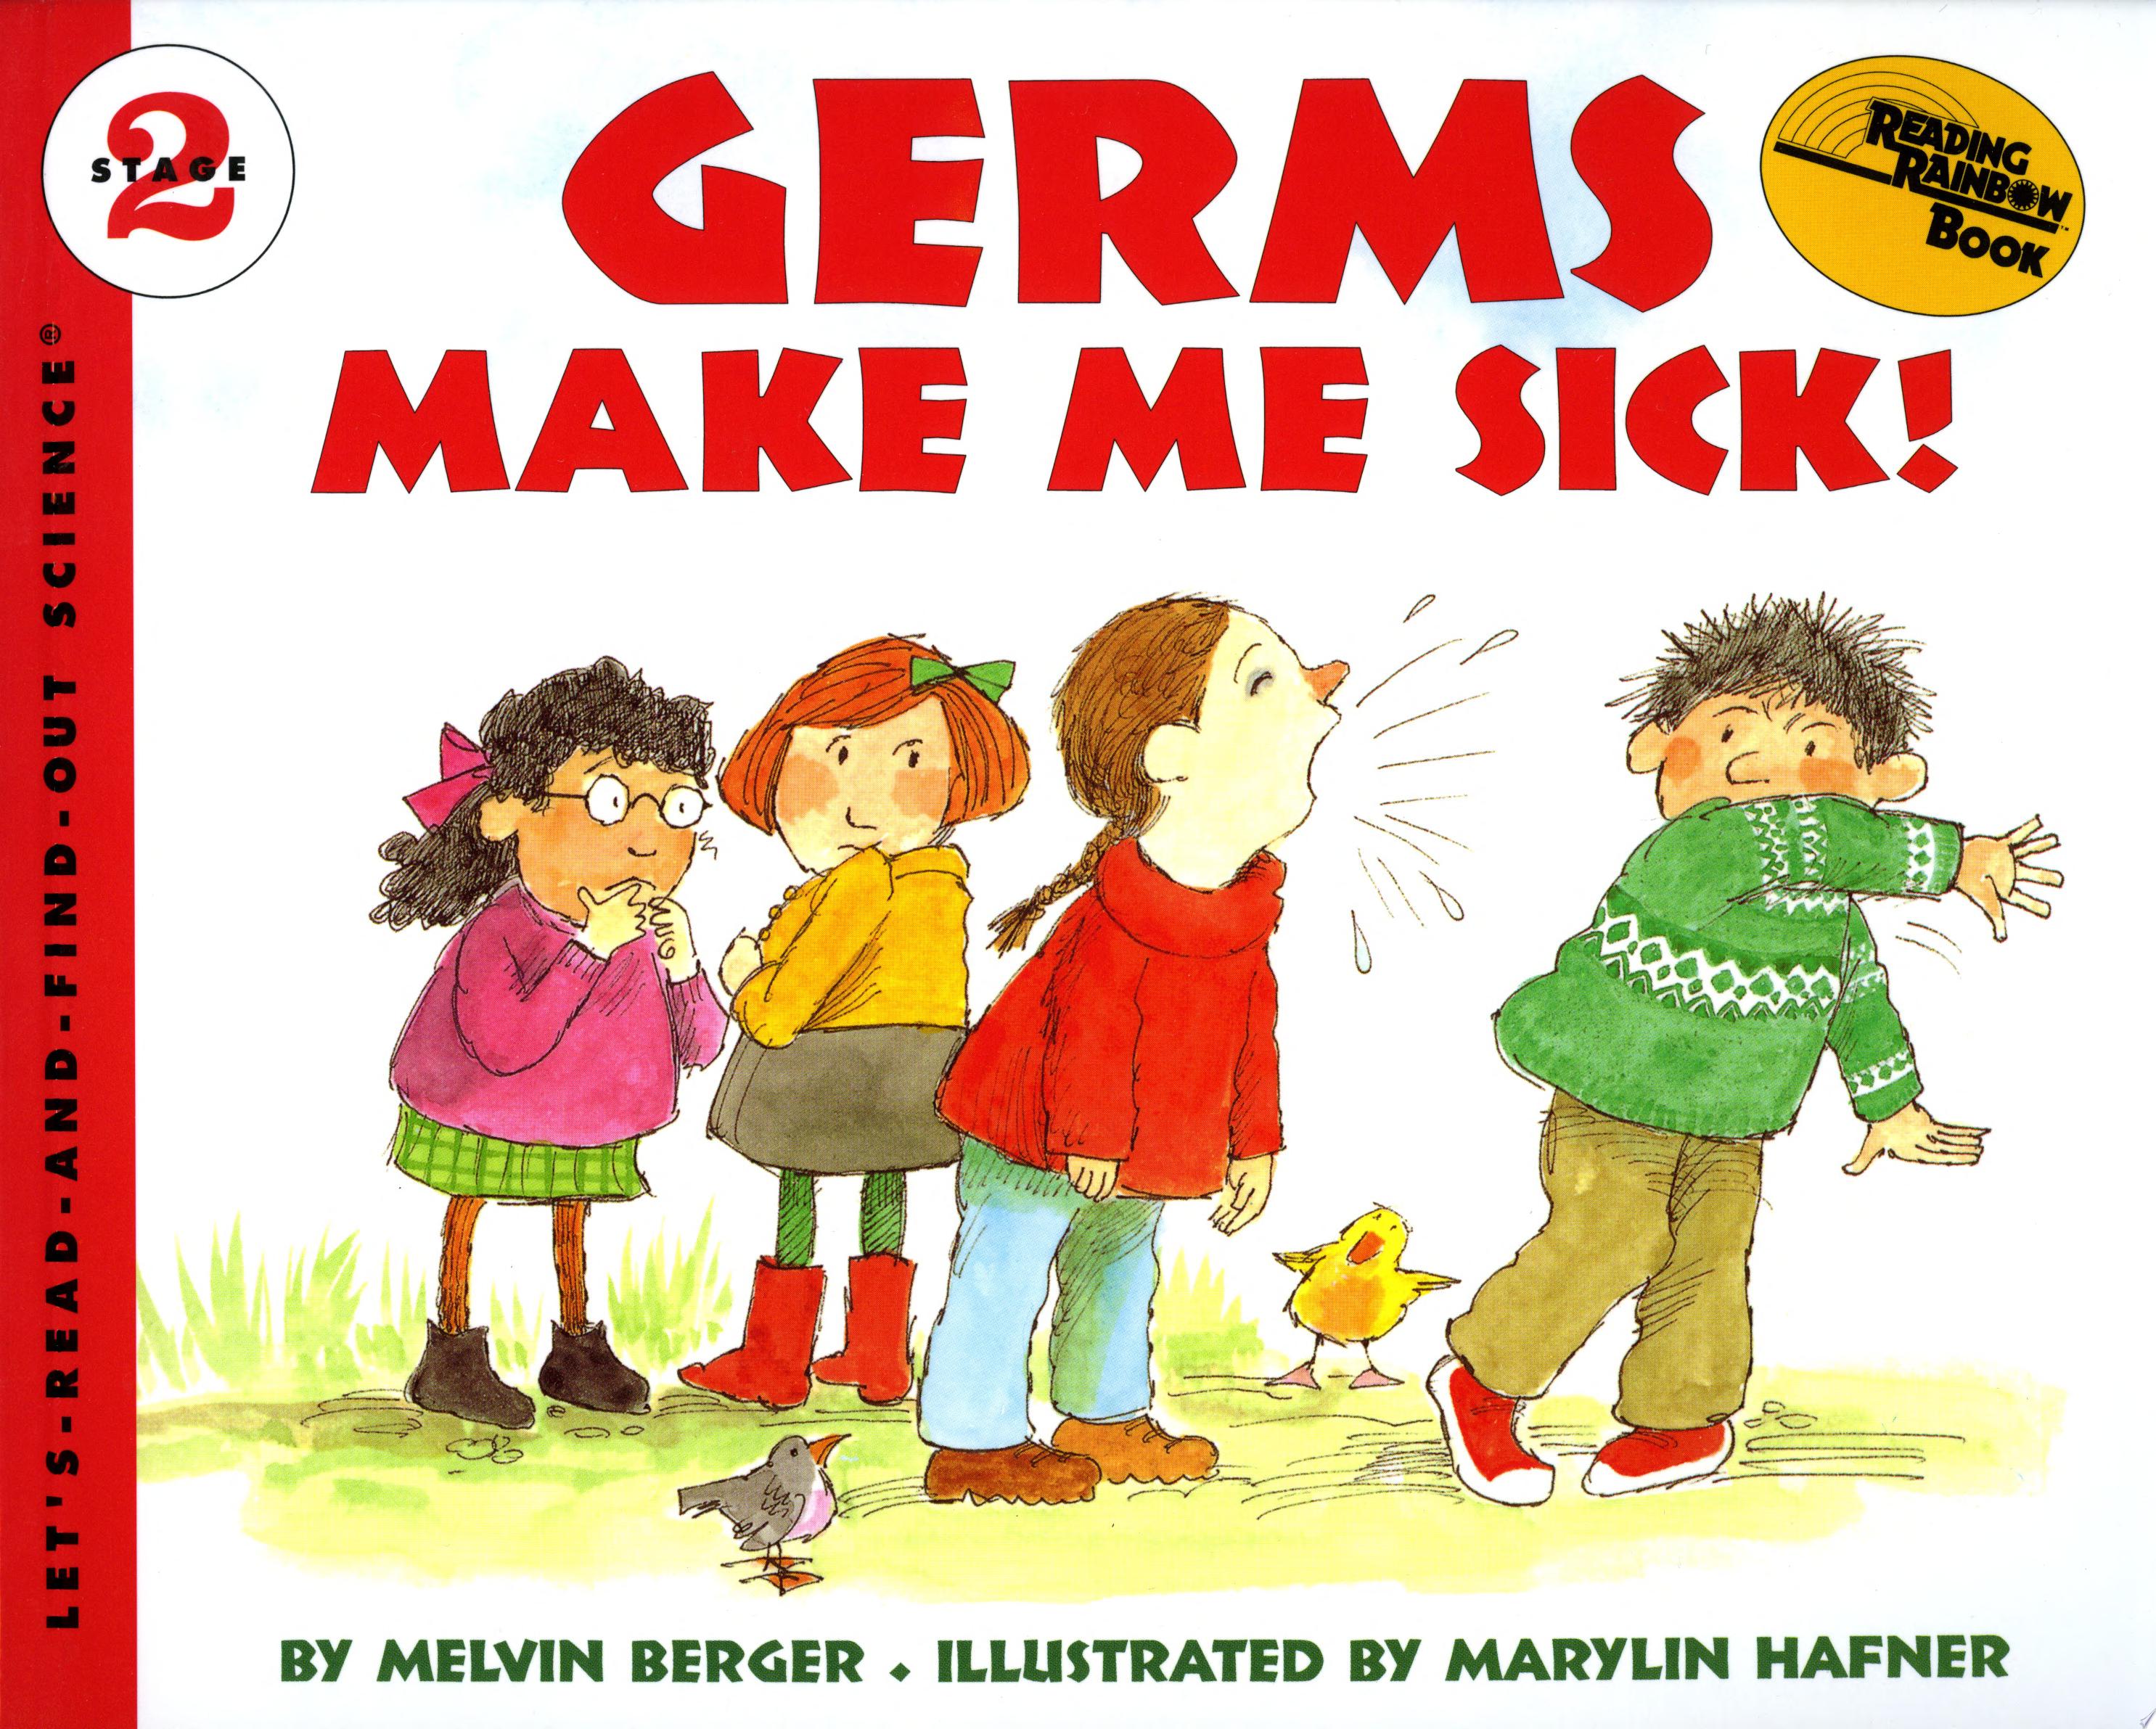 Image for "Germs Make Me Sick!"